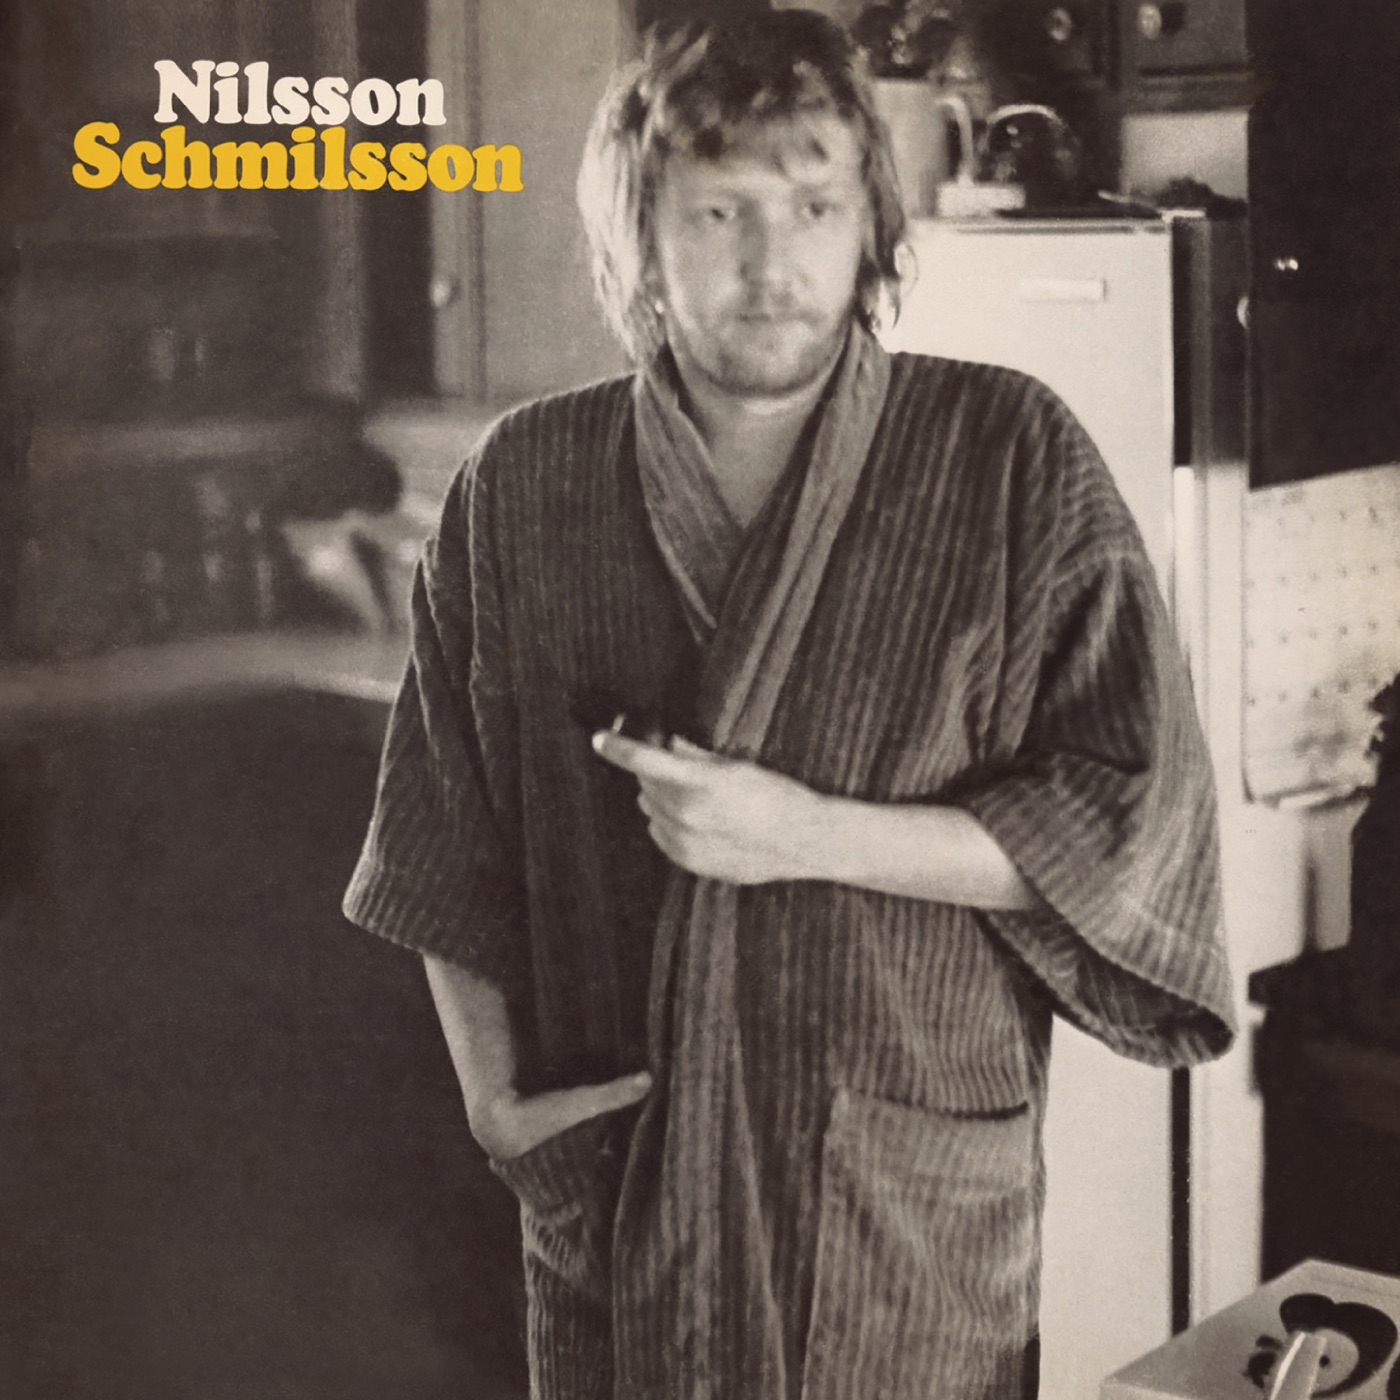 Nilsson Schmilsson by Harry Nilsson